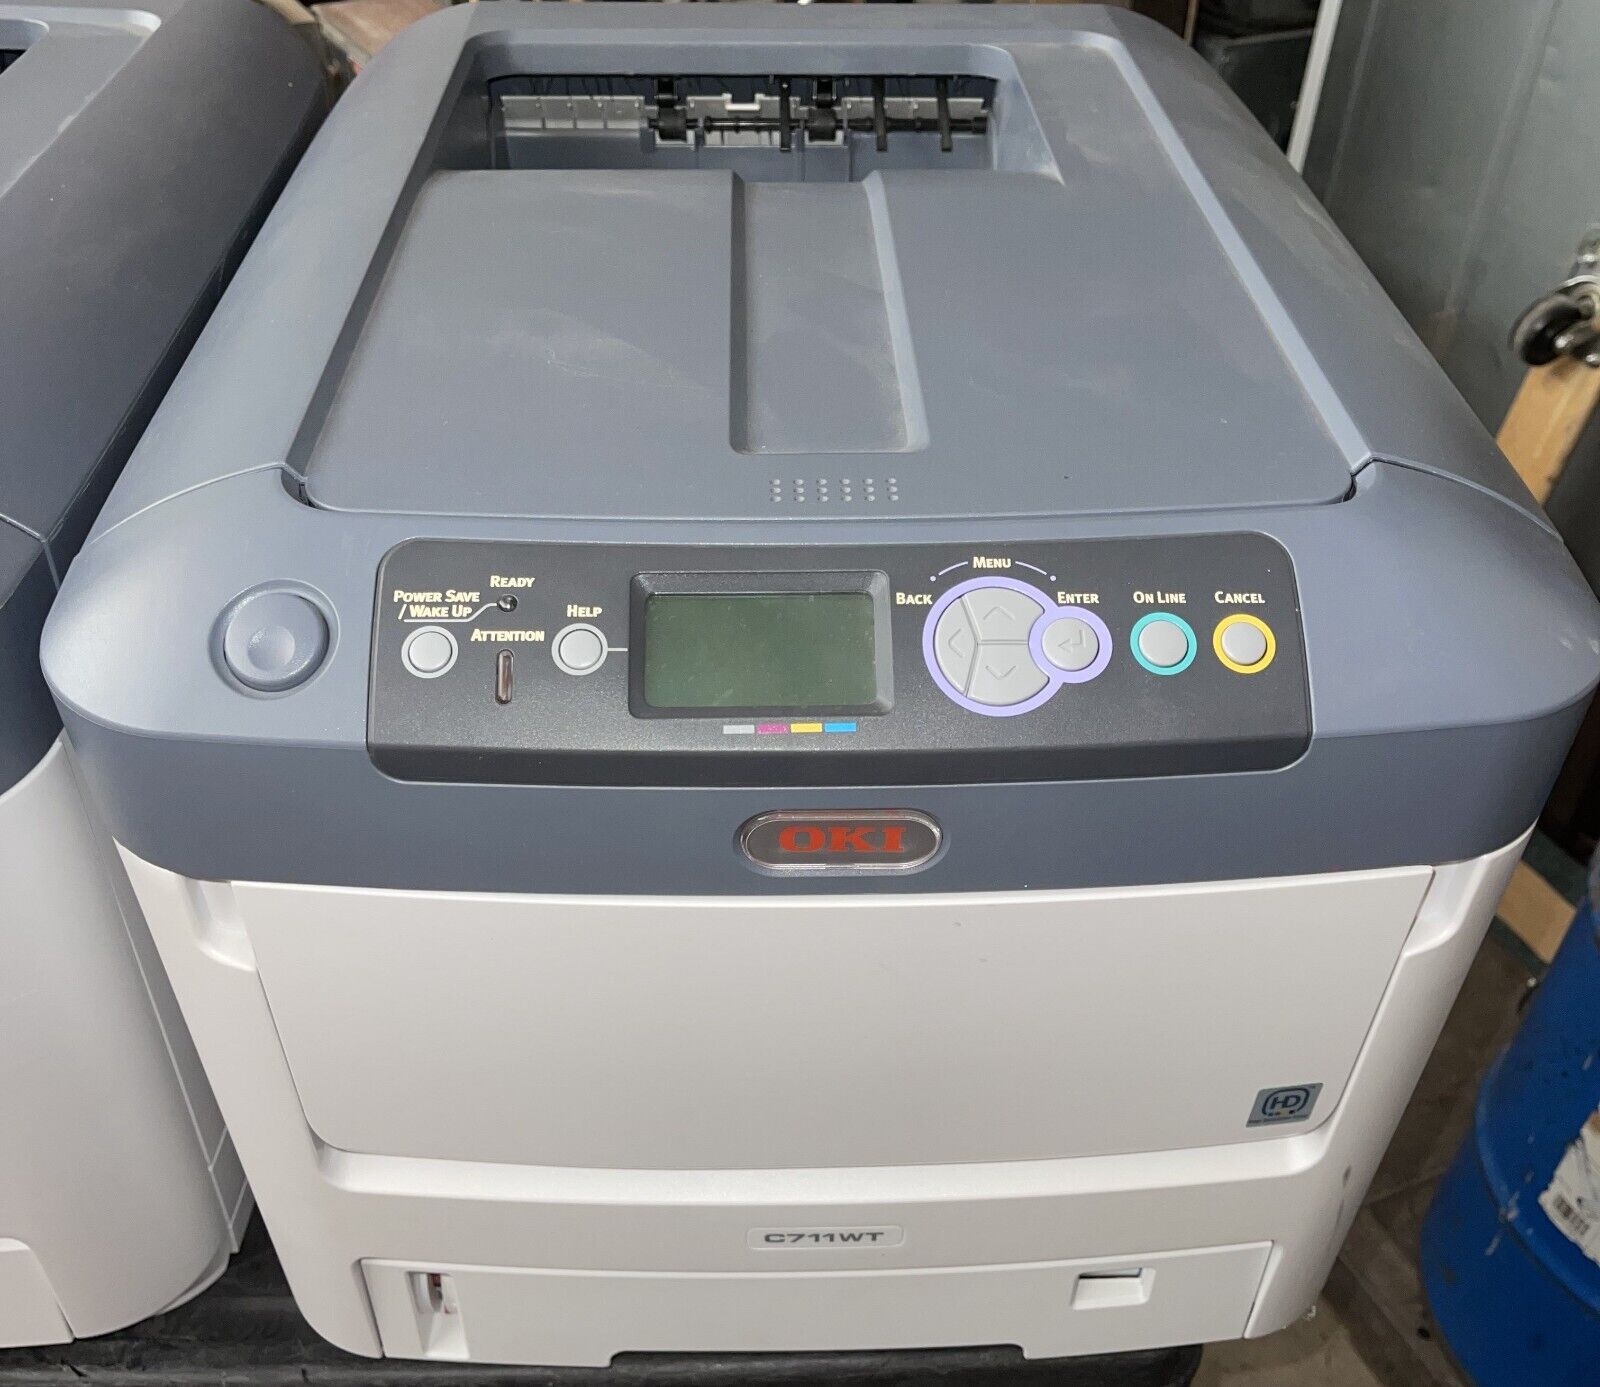 Oki C711WT Inkjet Digital Transfer Printer (PARTS ONLY PLEASE READ DECRIPTION)